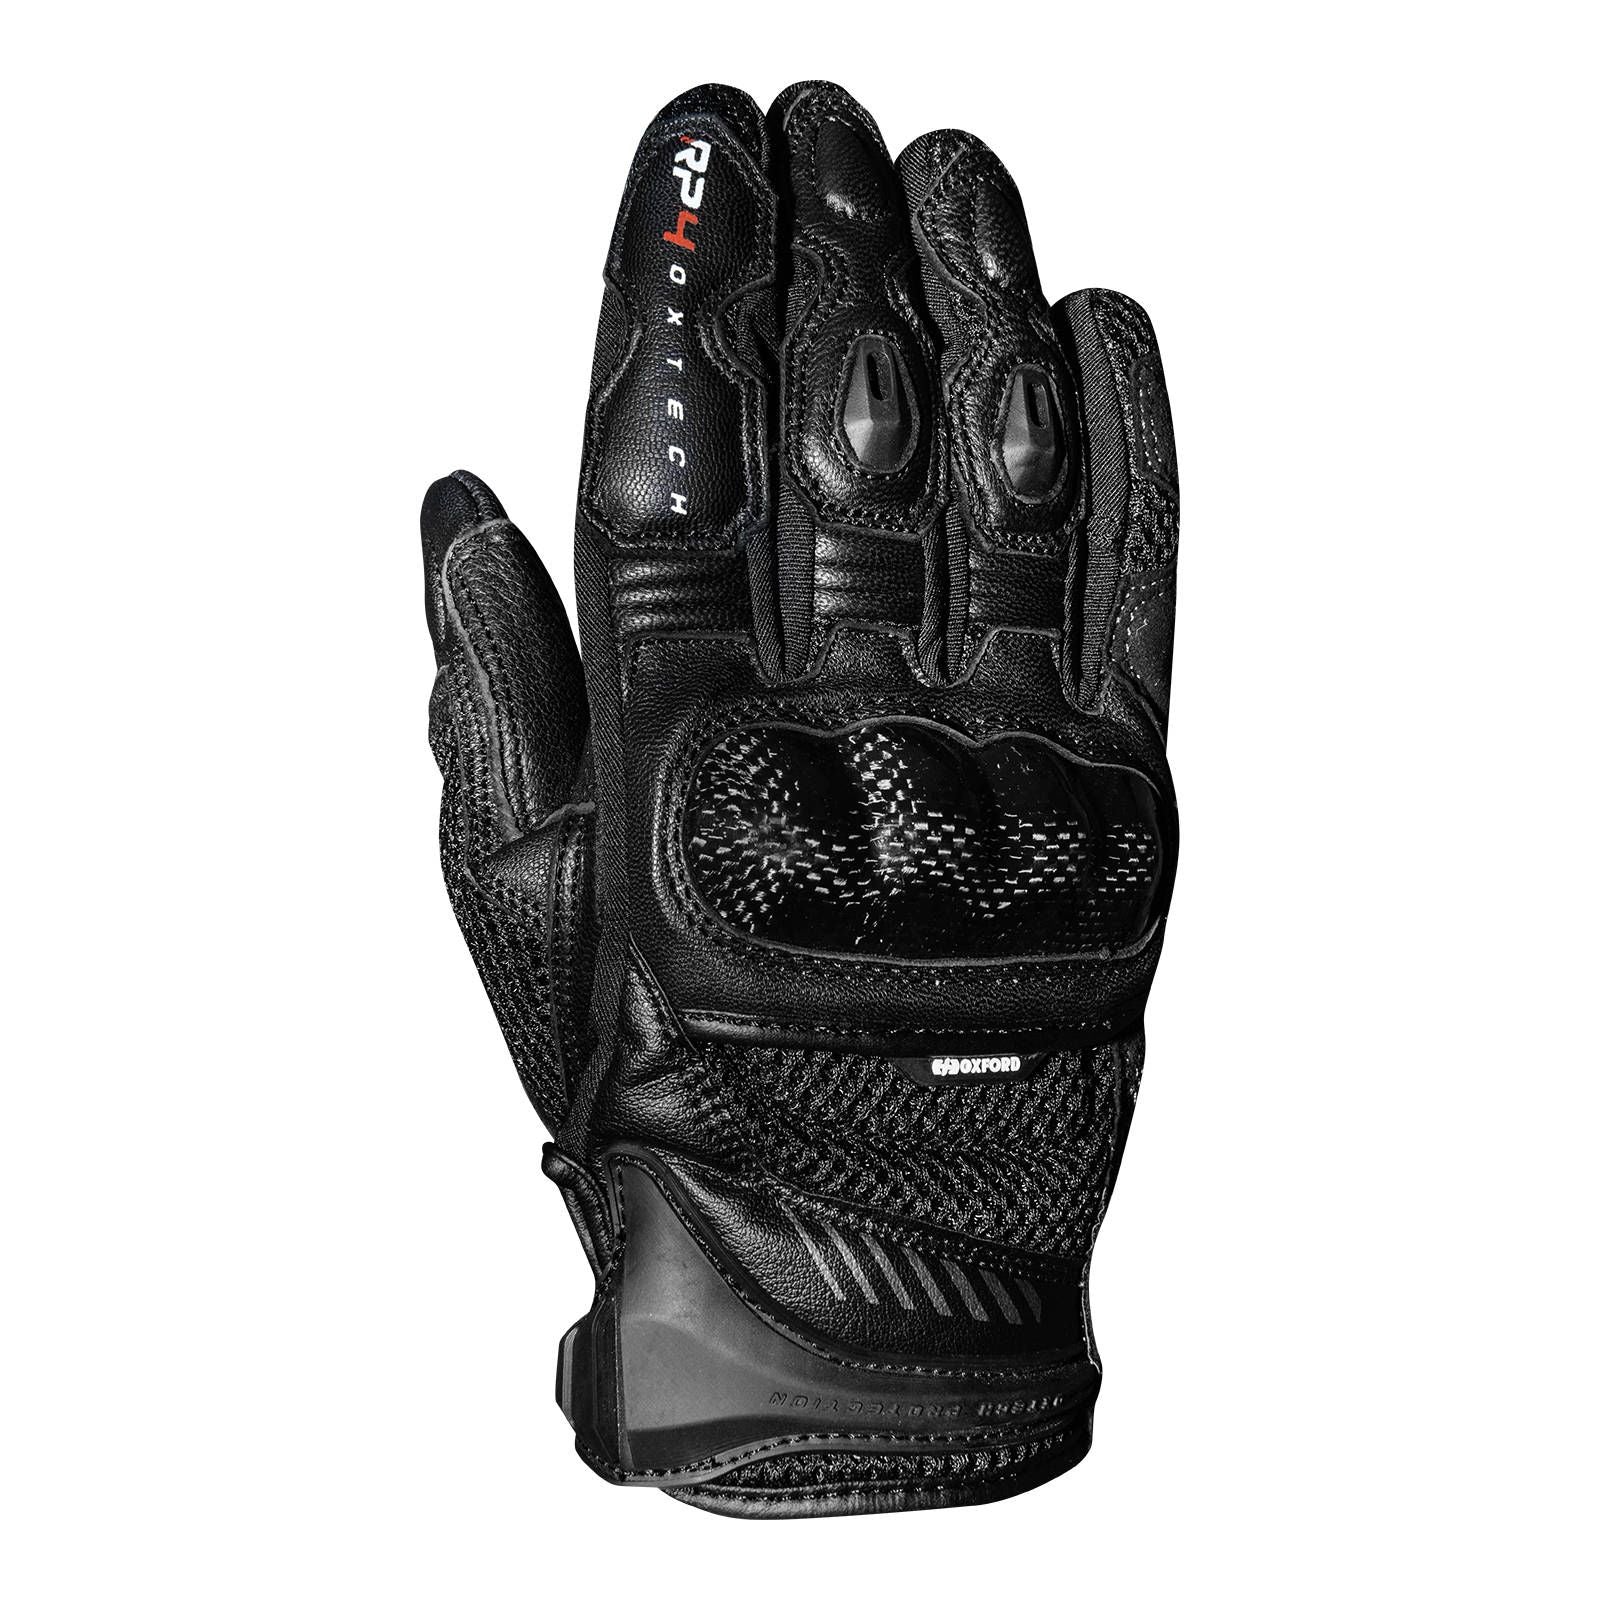 New OXFORD RP-4 Short Leather Sport Glove - Black (2XL) #OXGM1731012XL